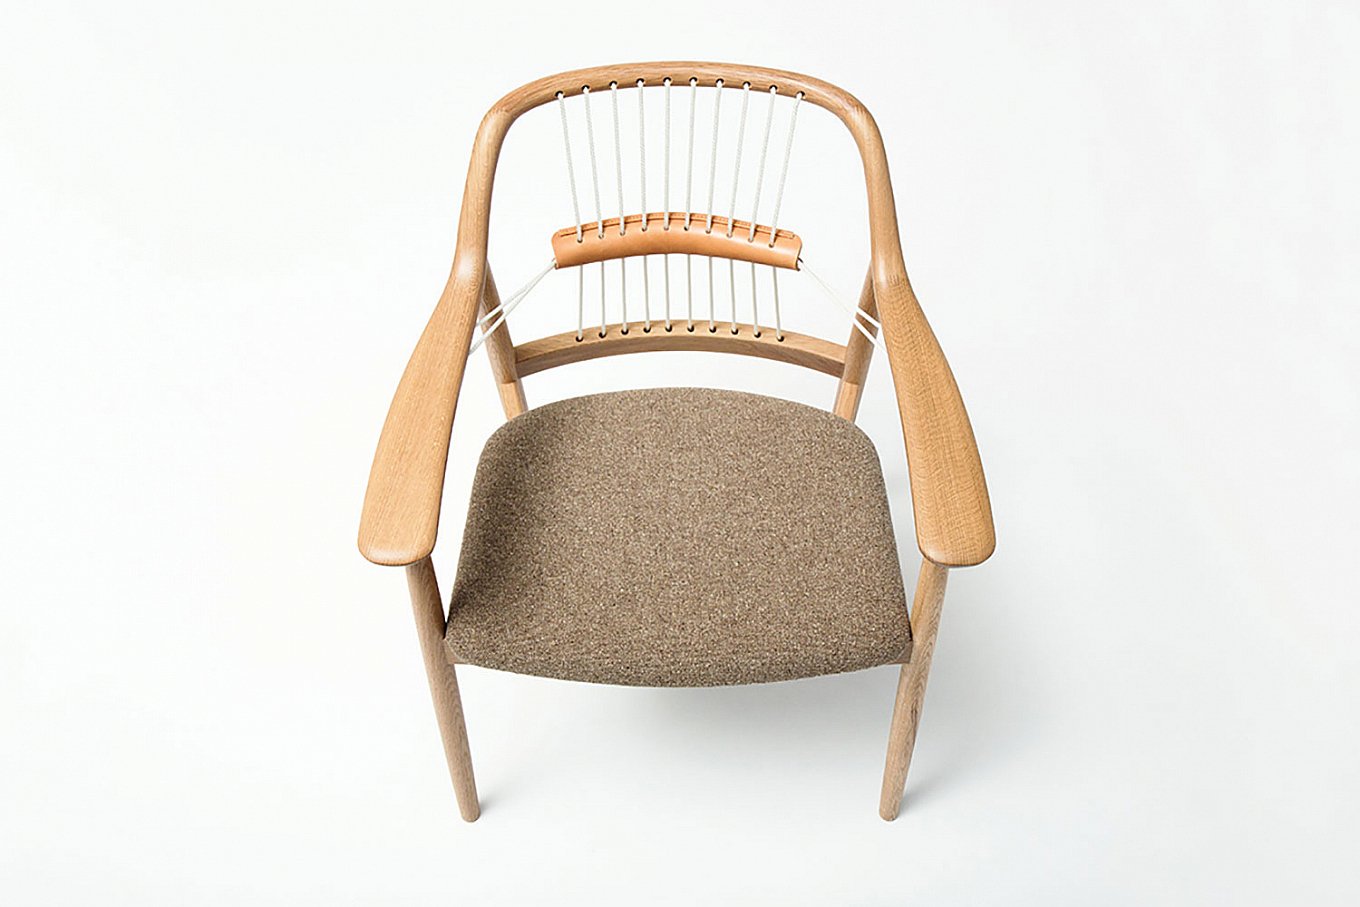 yc1-chair-by-mikiya-kobayashi-11